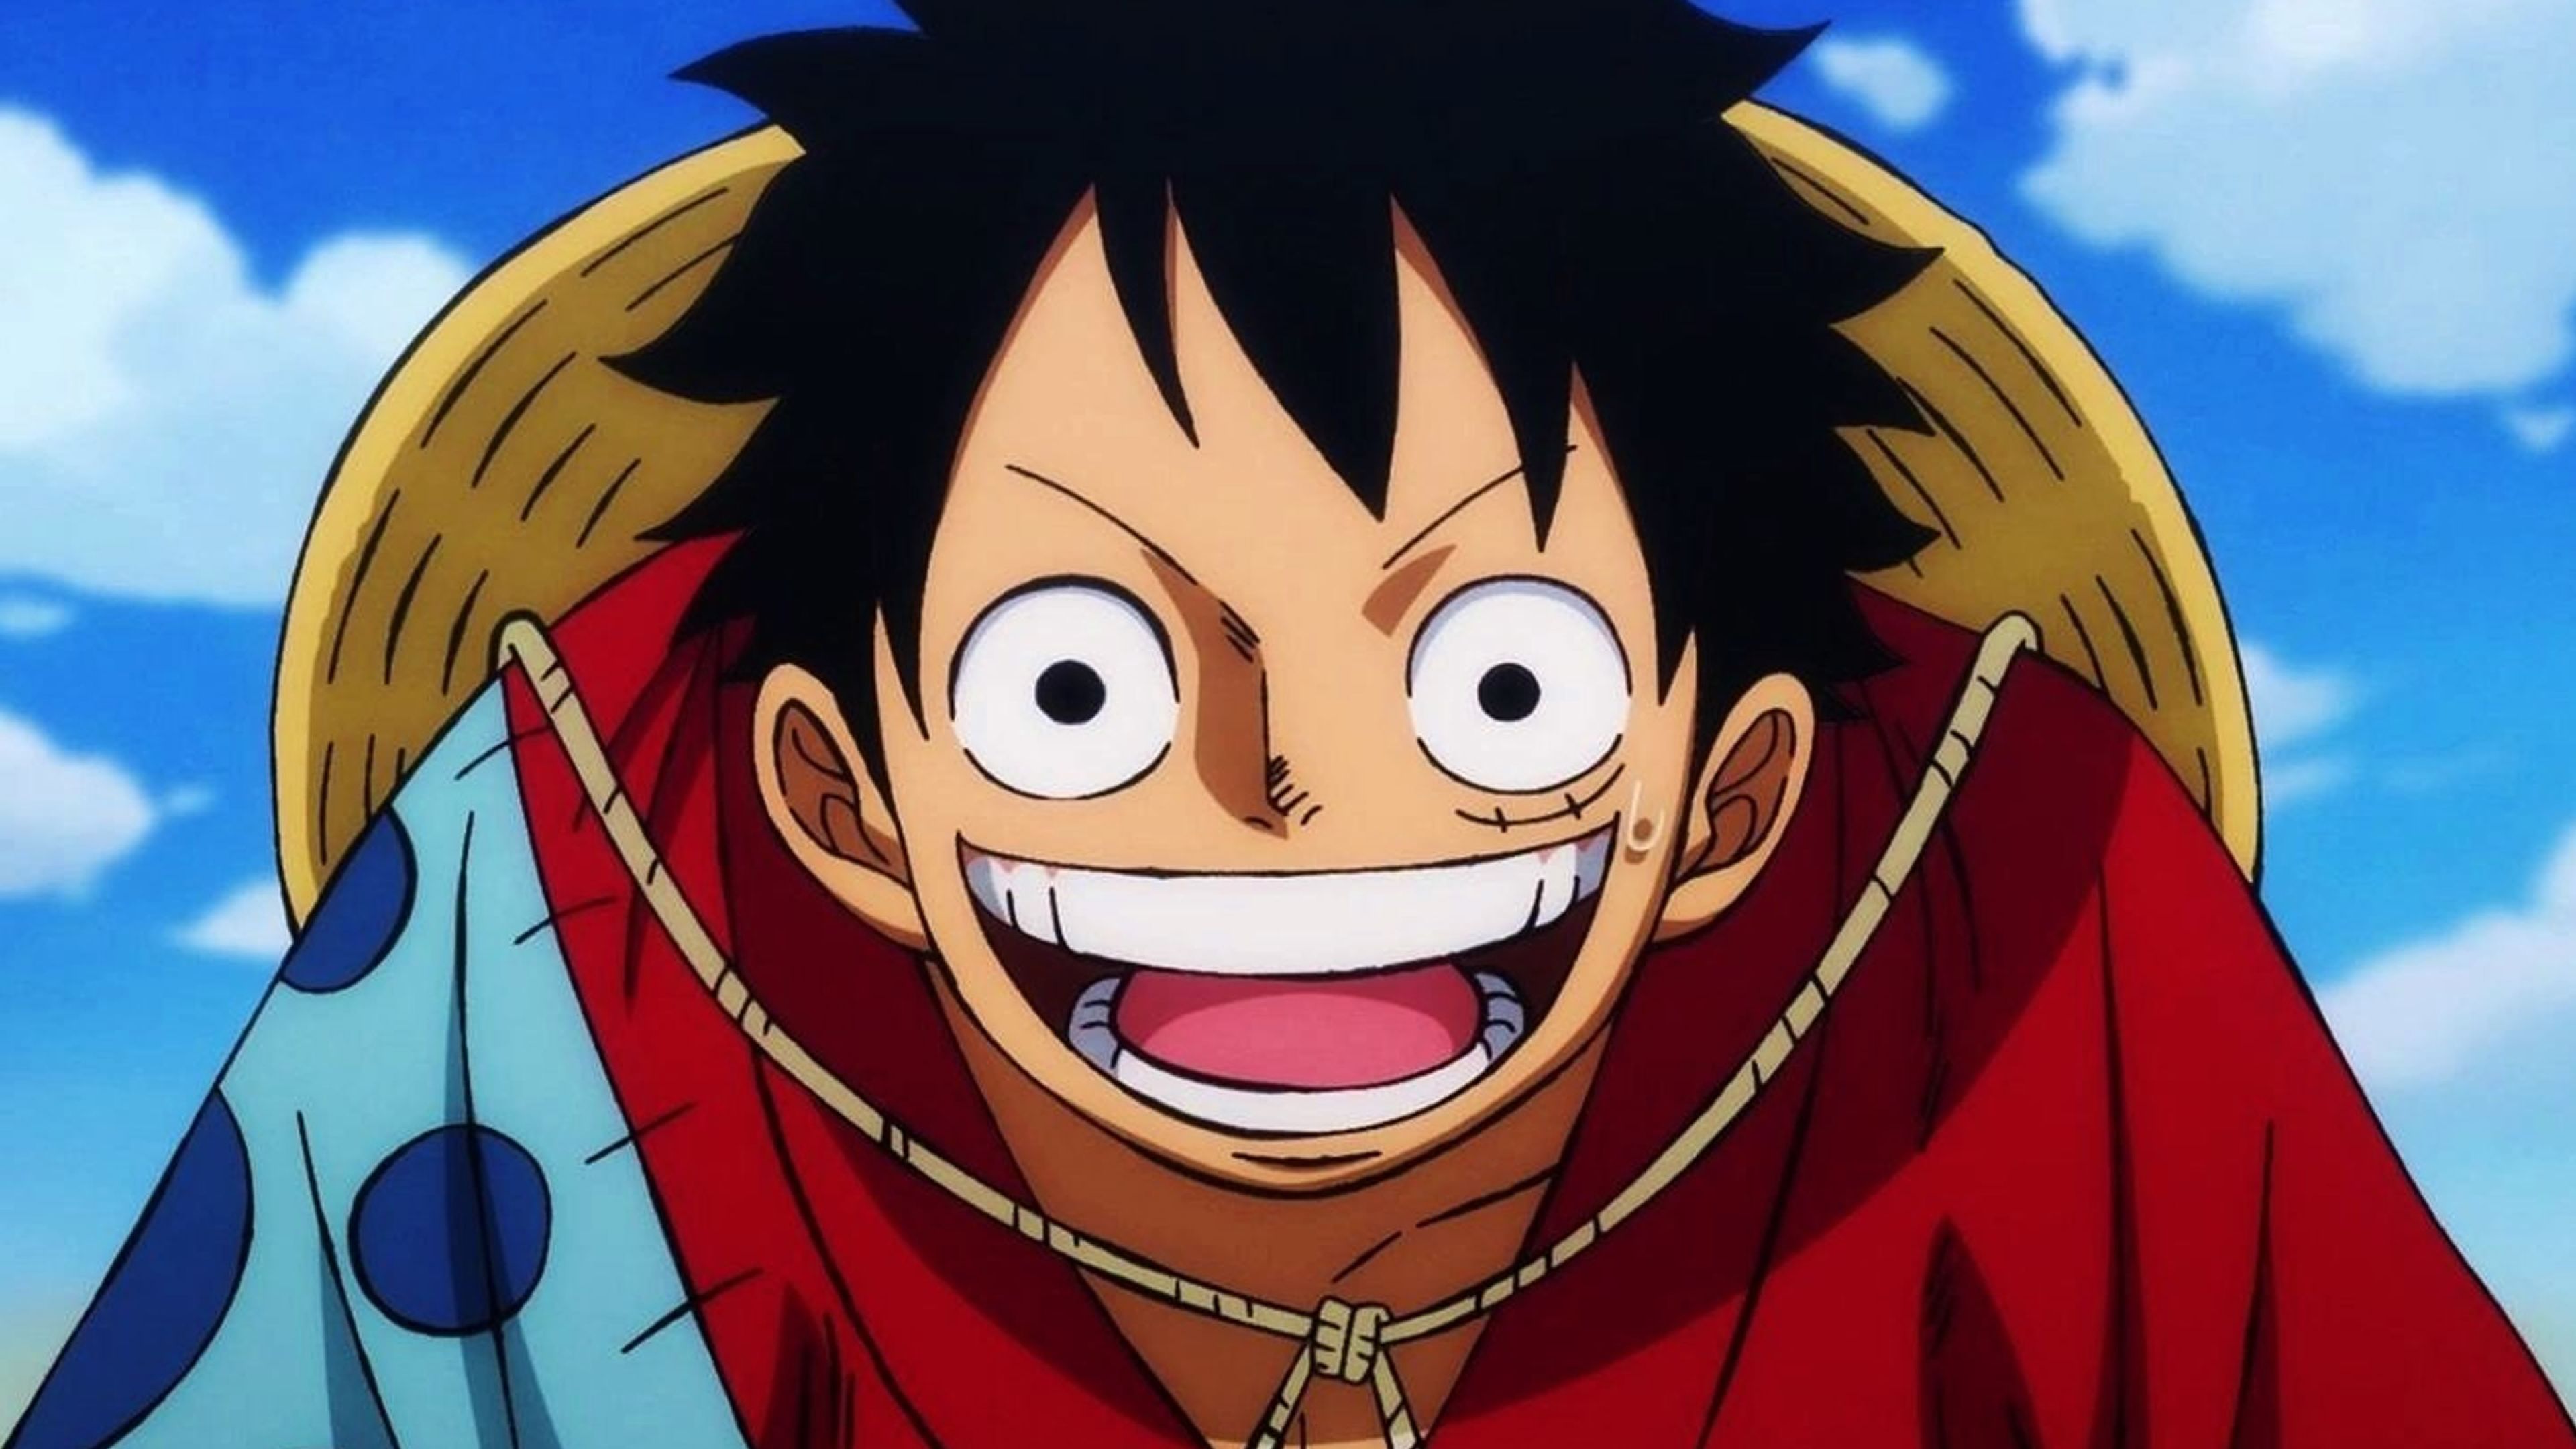 One Piece - Monkey D. Luffy